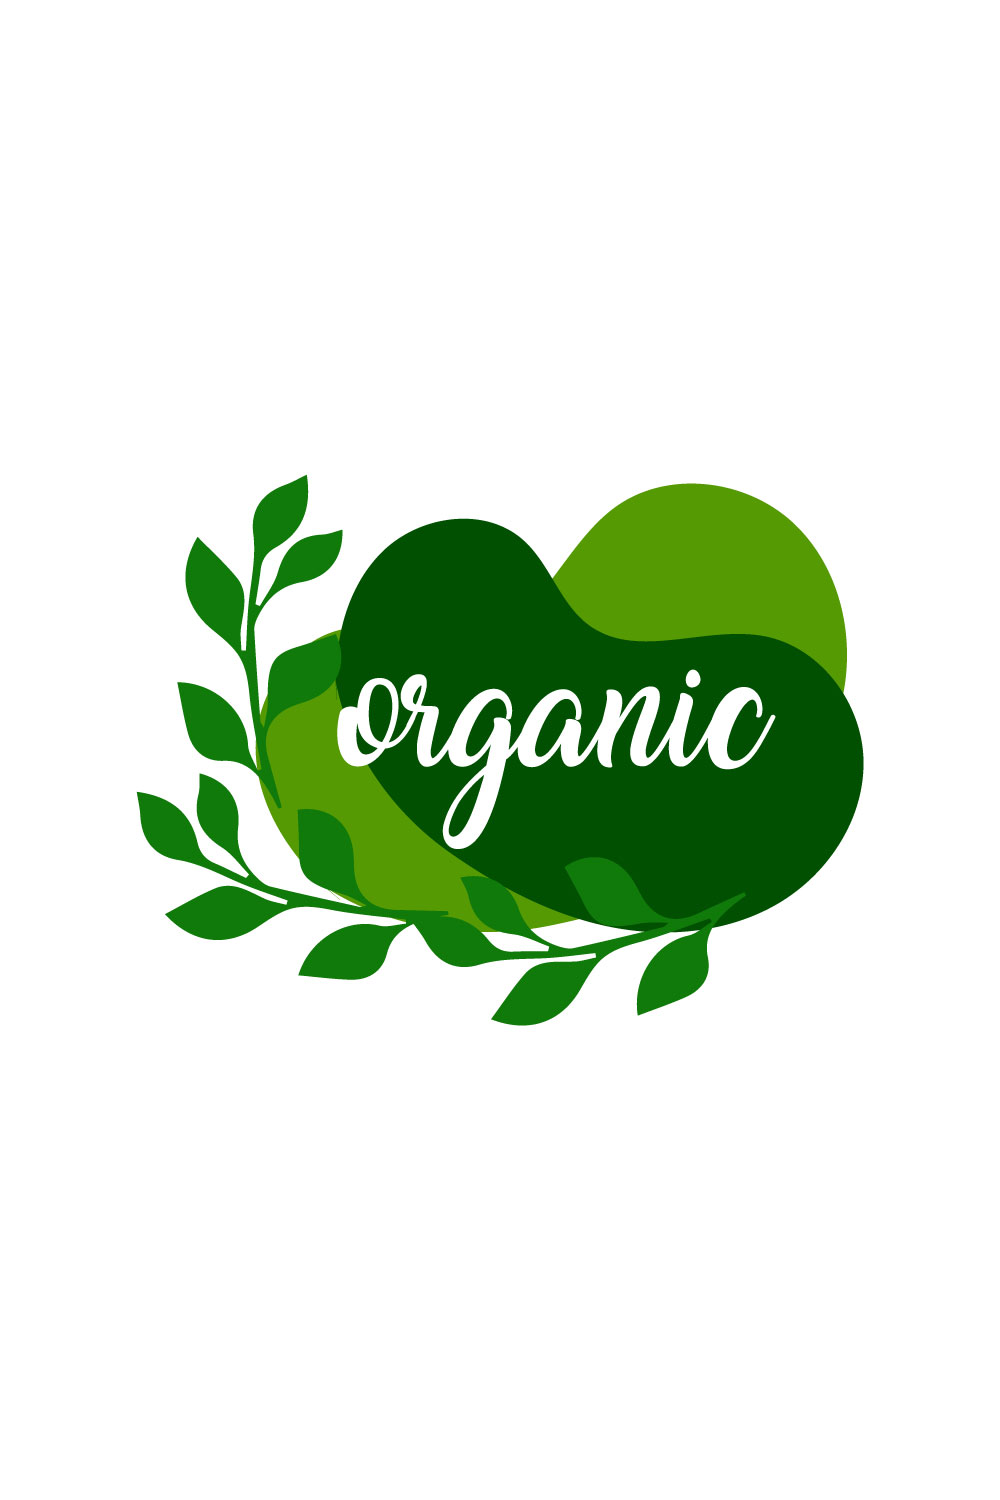 Free Certified organic logo pinterest preview image.